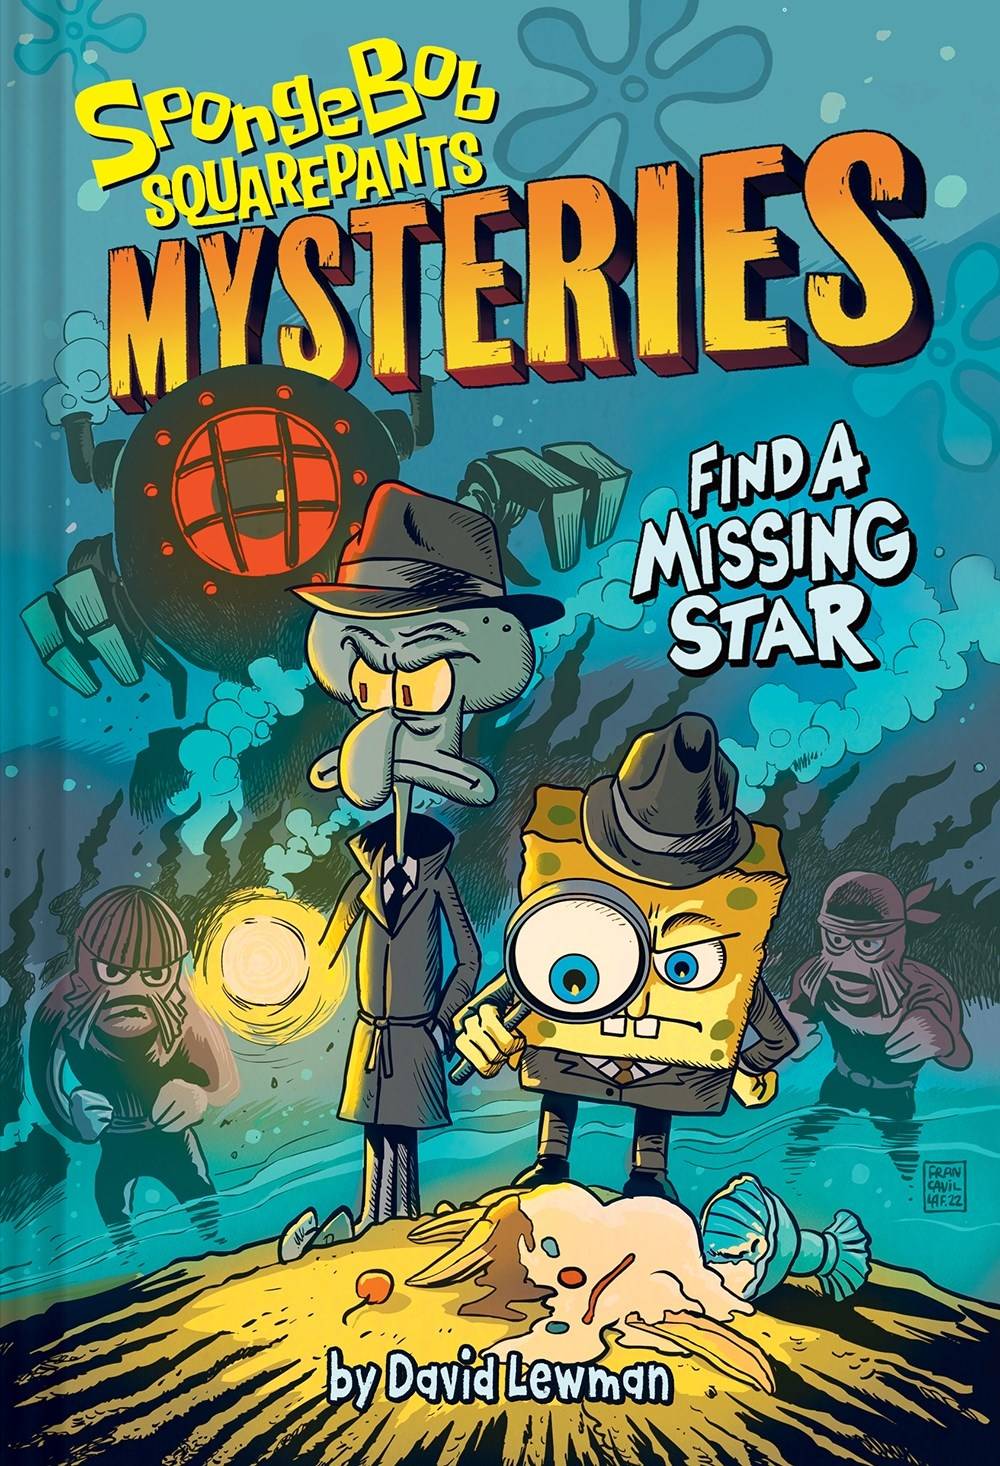 Spongebob Squarepants Mysteries Book 1 Find Missing Star